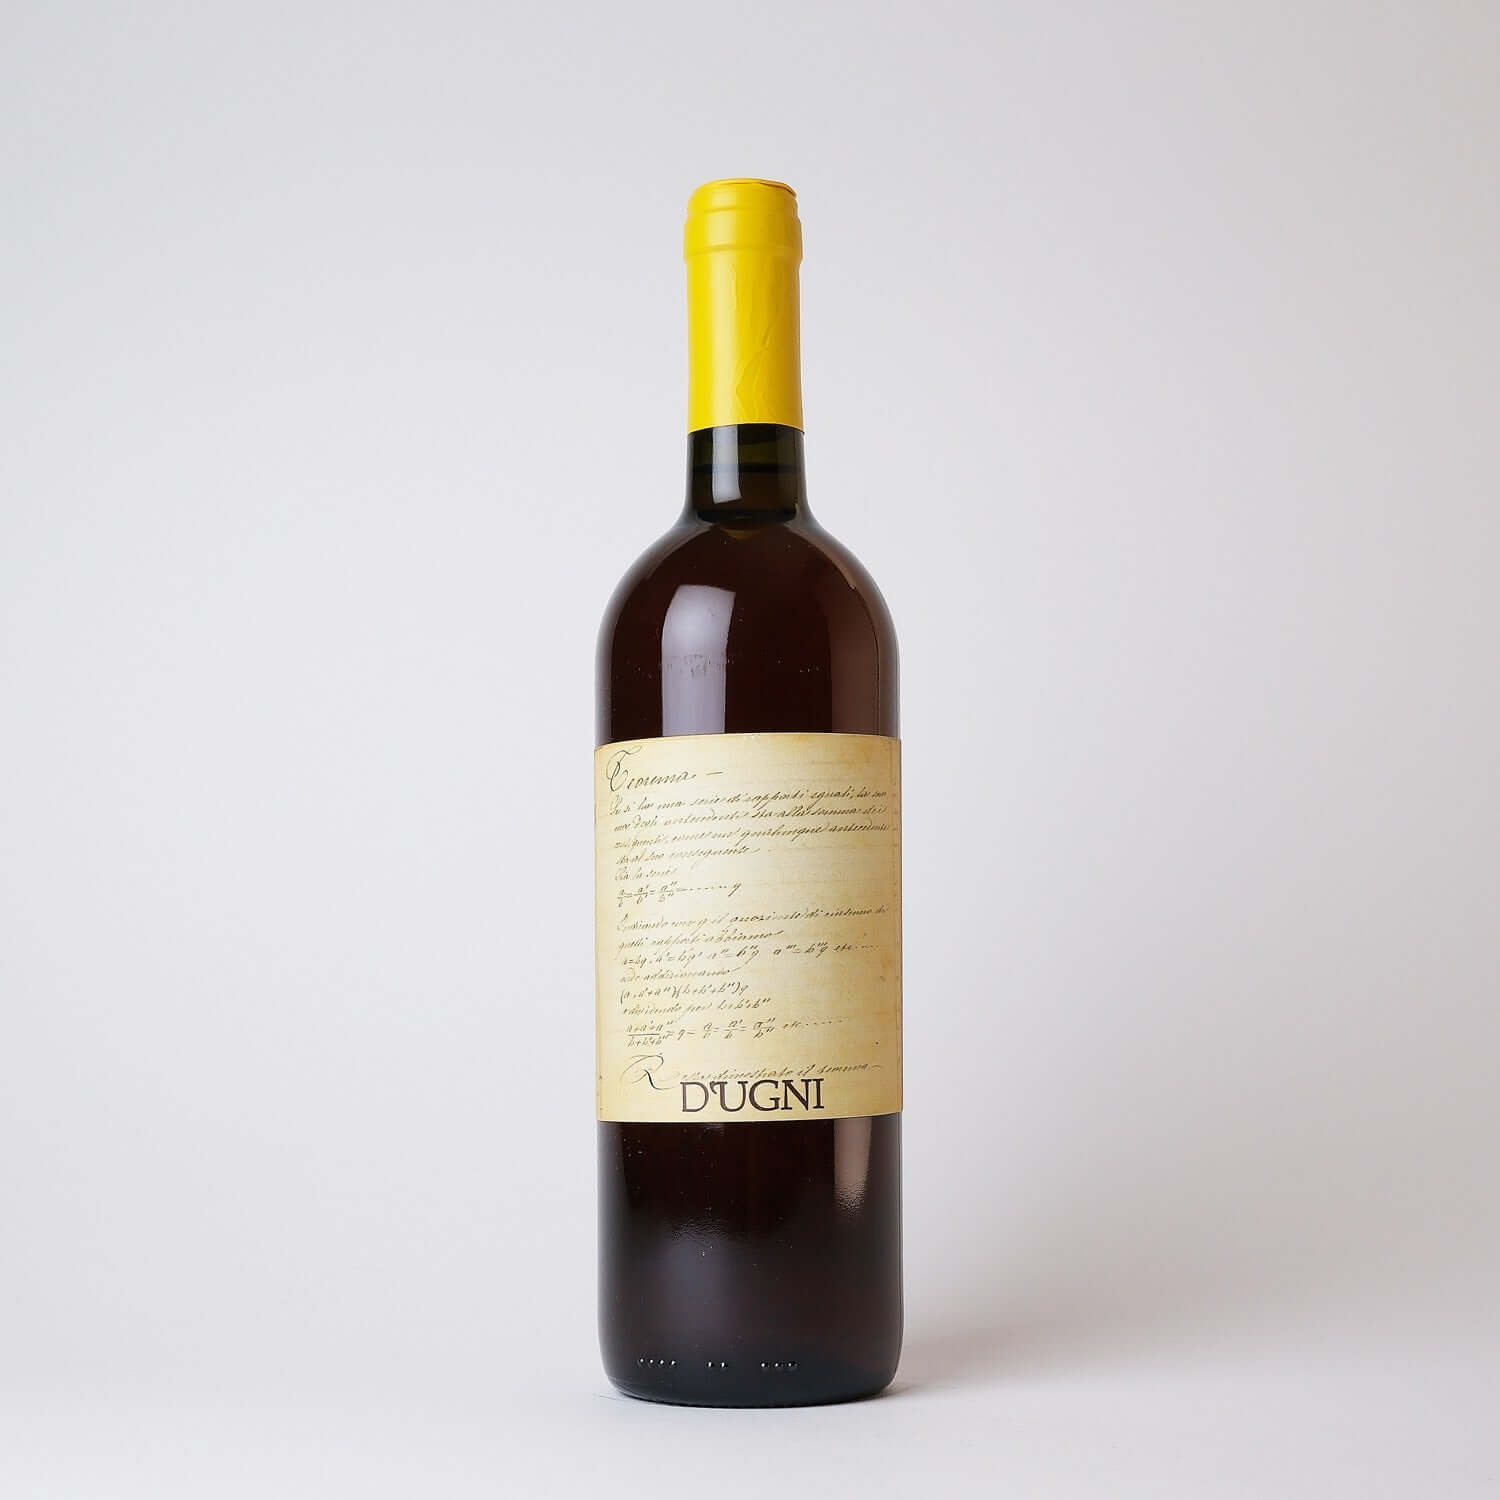 Bottle shot of Feudo d'Ugni Bianco 2018, Orange Wine, made by Feudo d'Ugni.